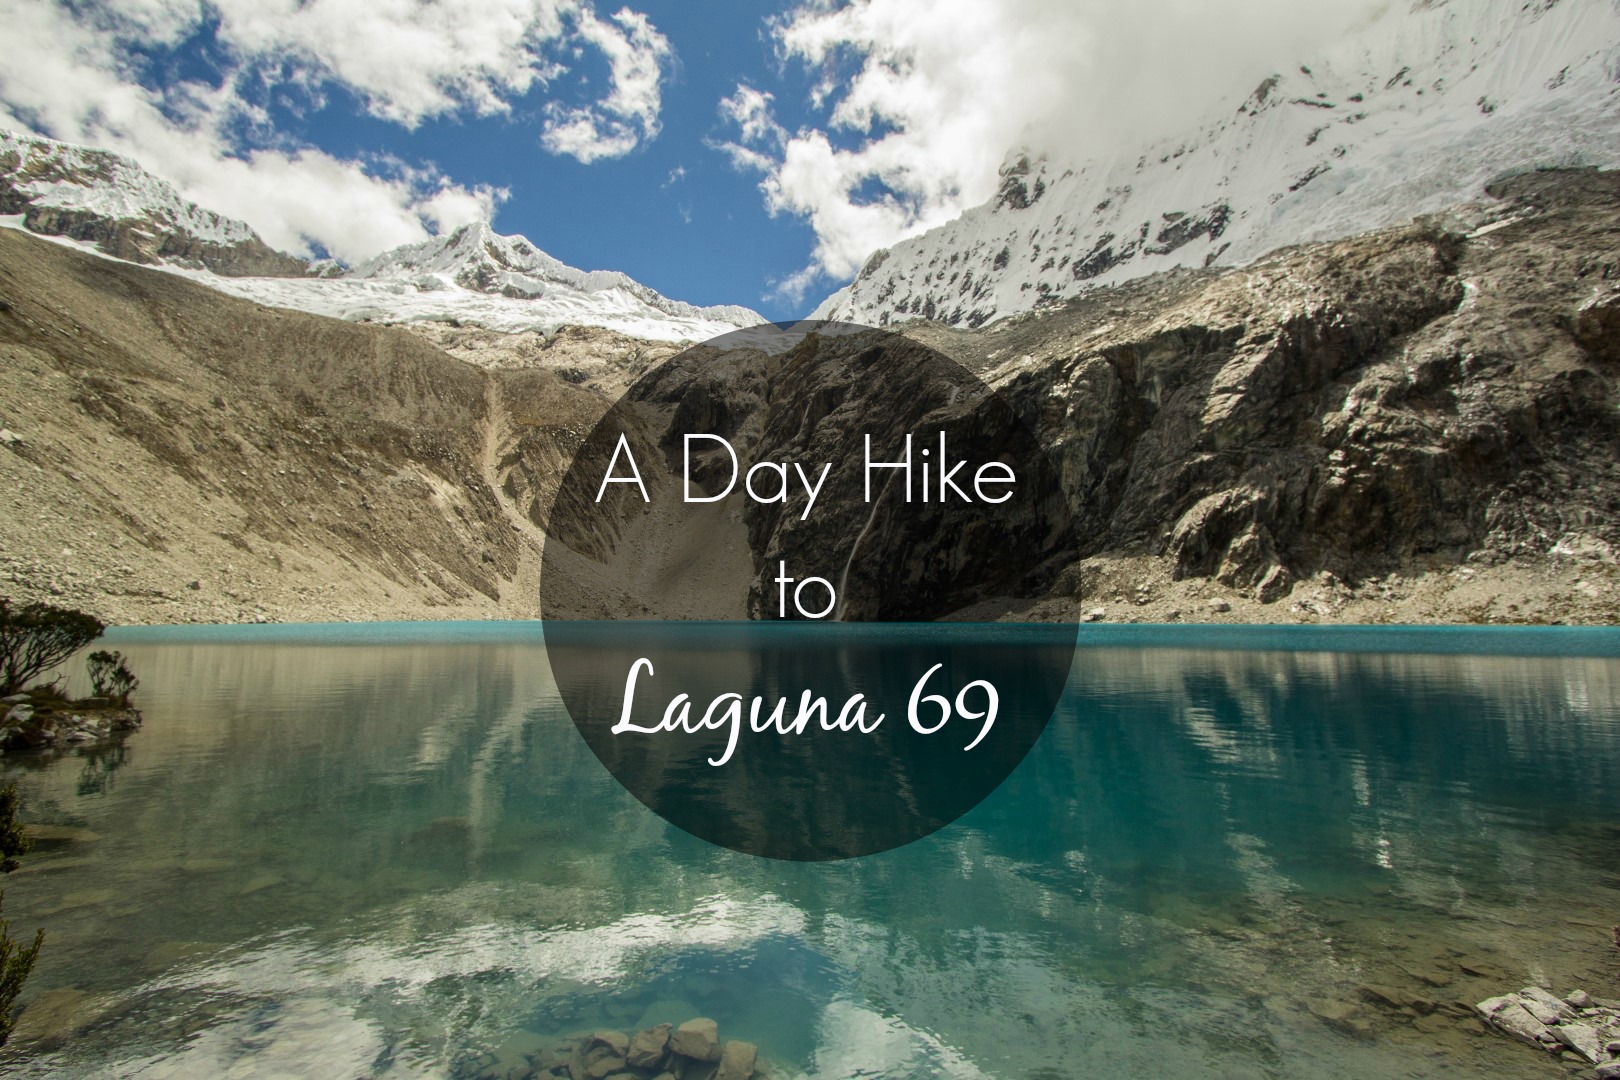 A Day Hike to Laguna 69